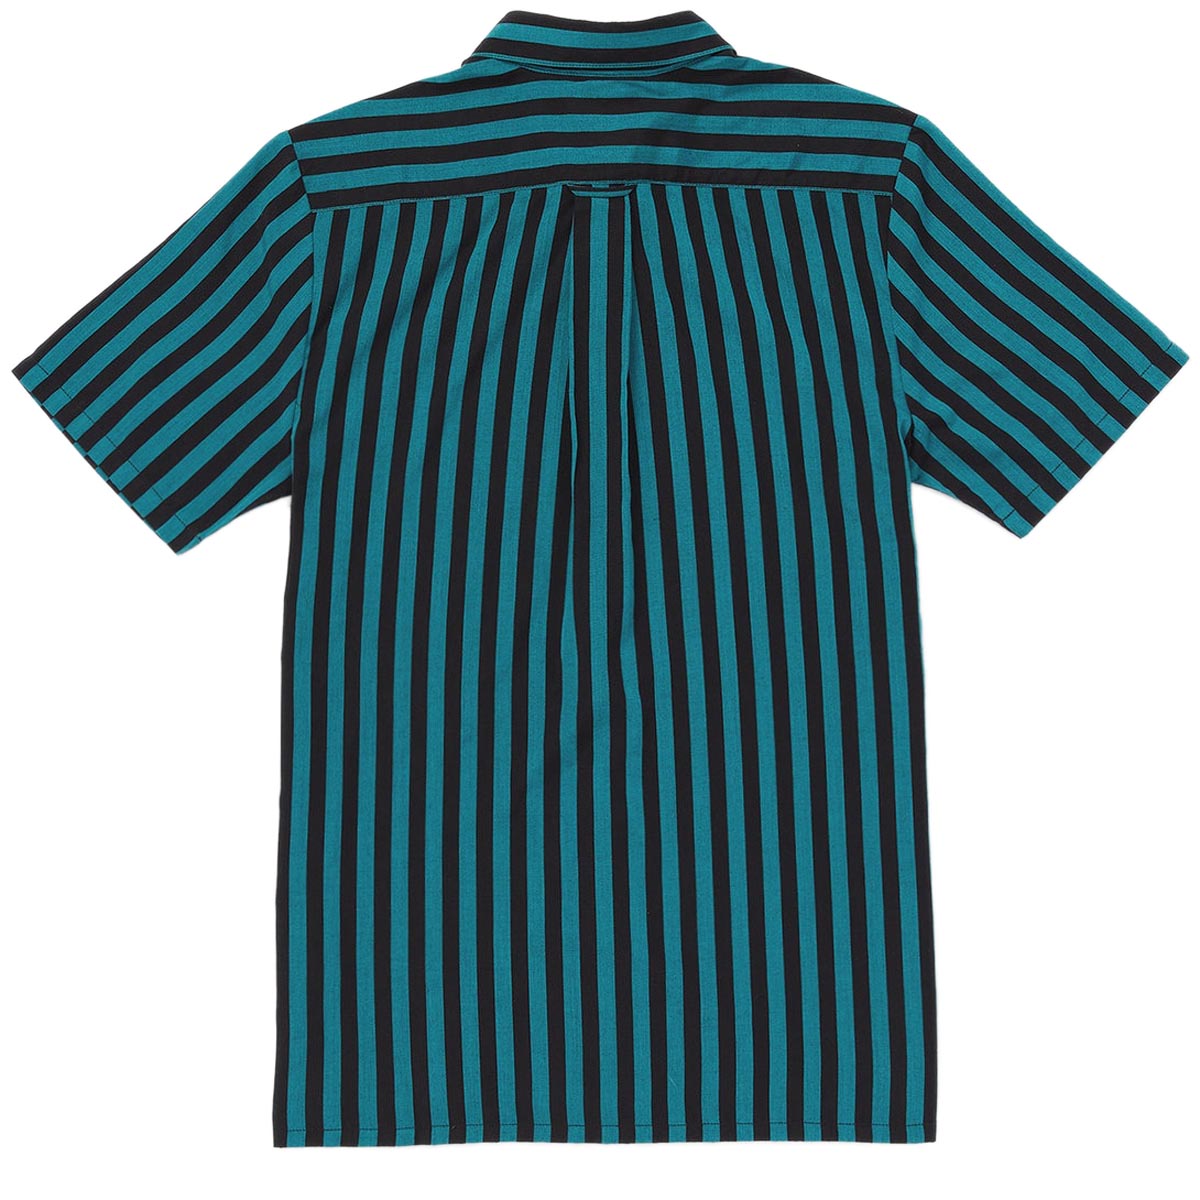 Volcom x Schroff Stripe Shirt - Dusty Aqua image 4